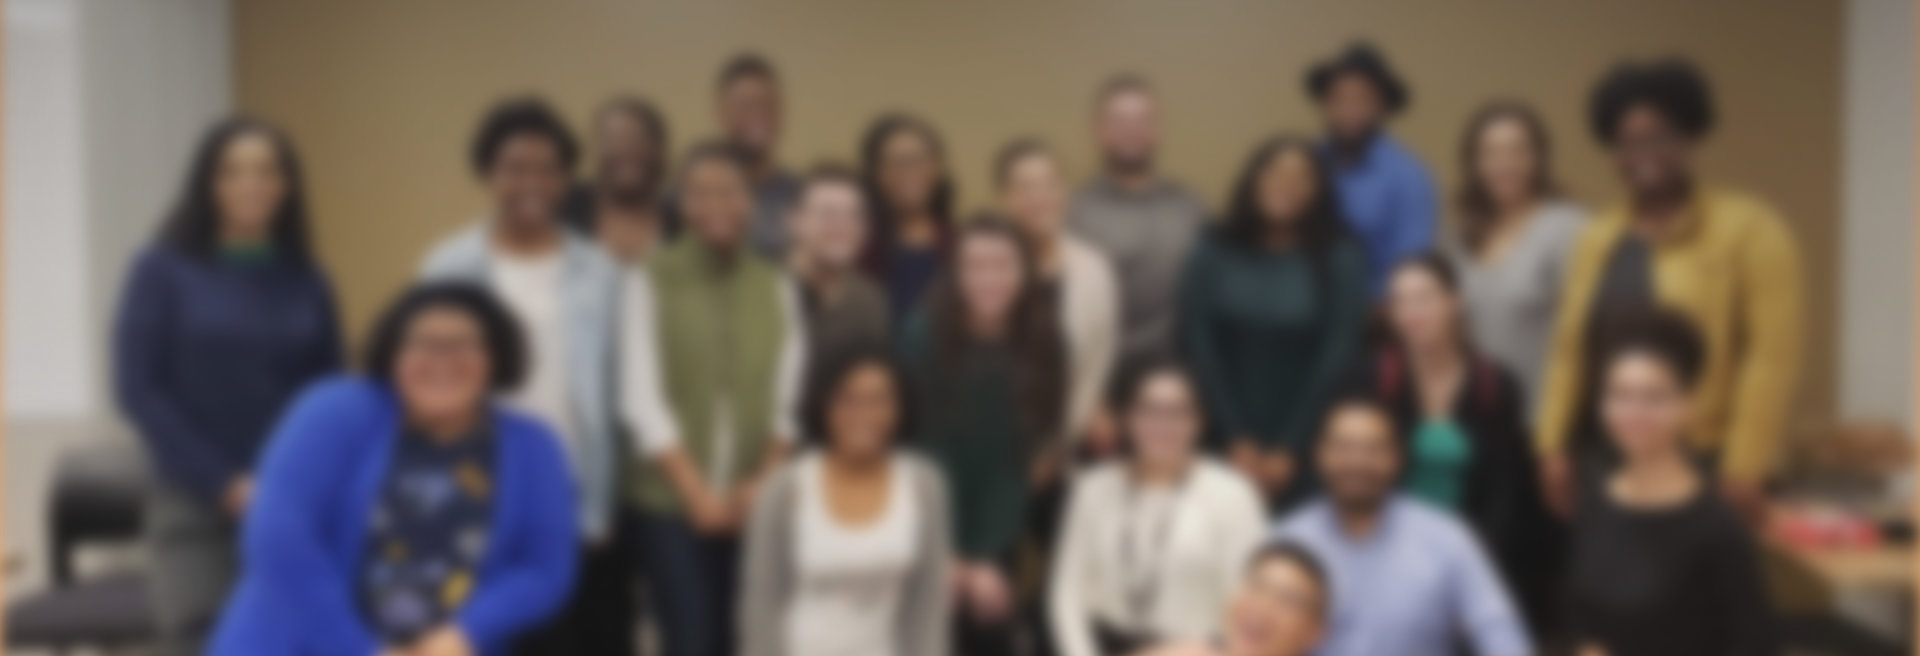 Blurred group photo